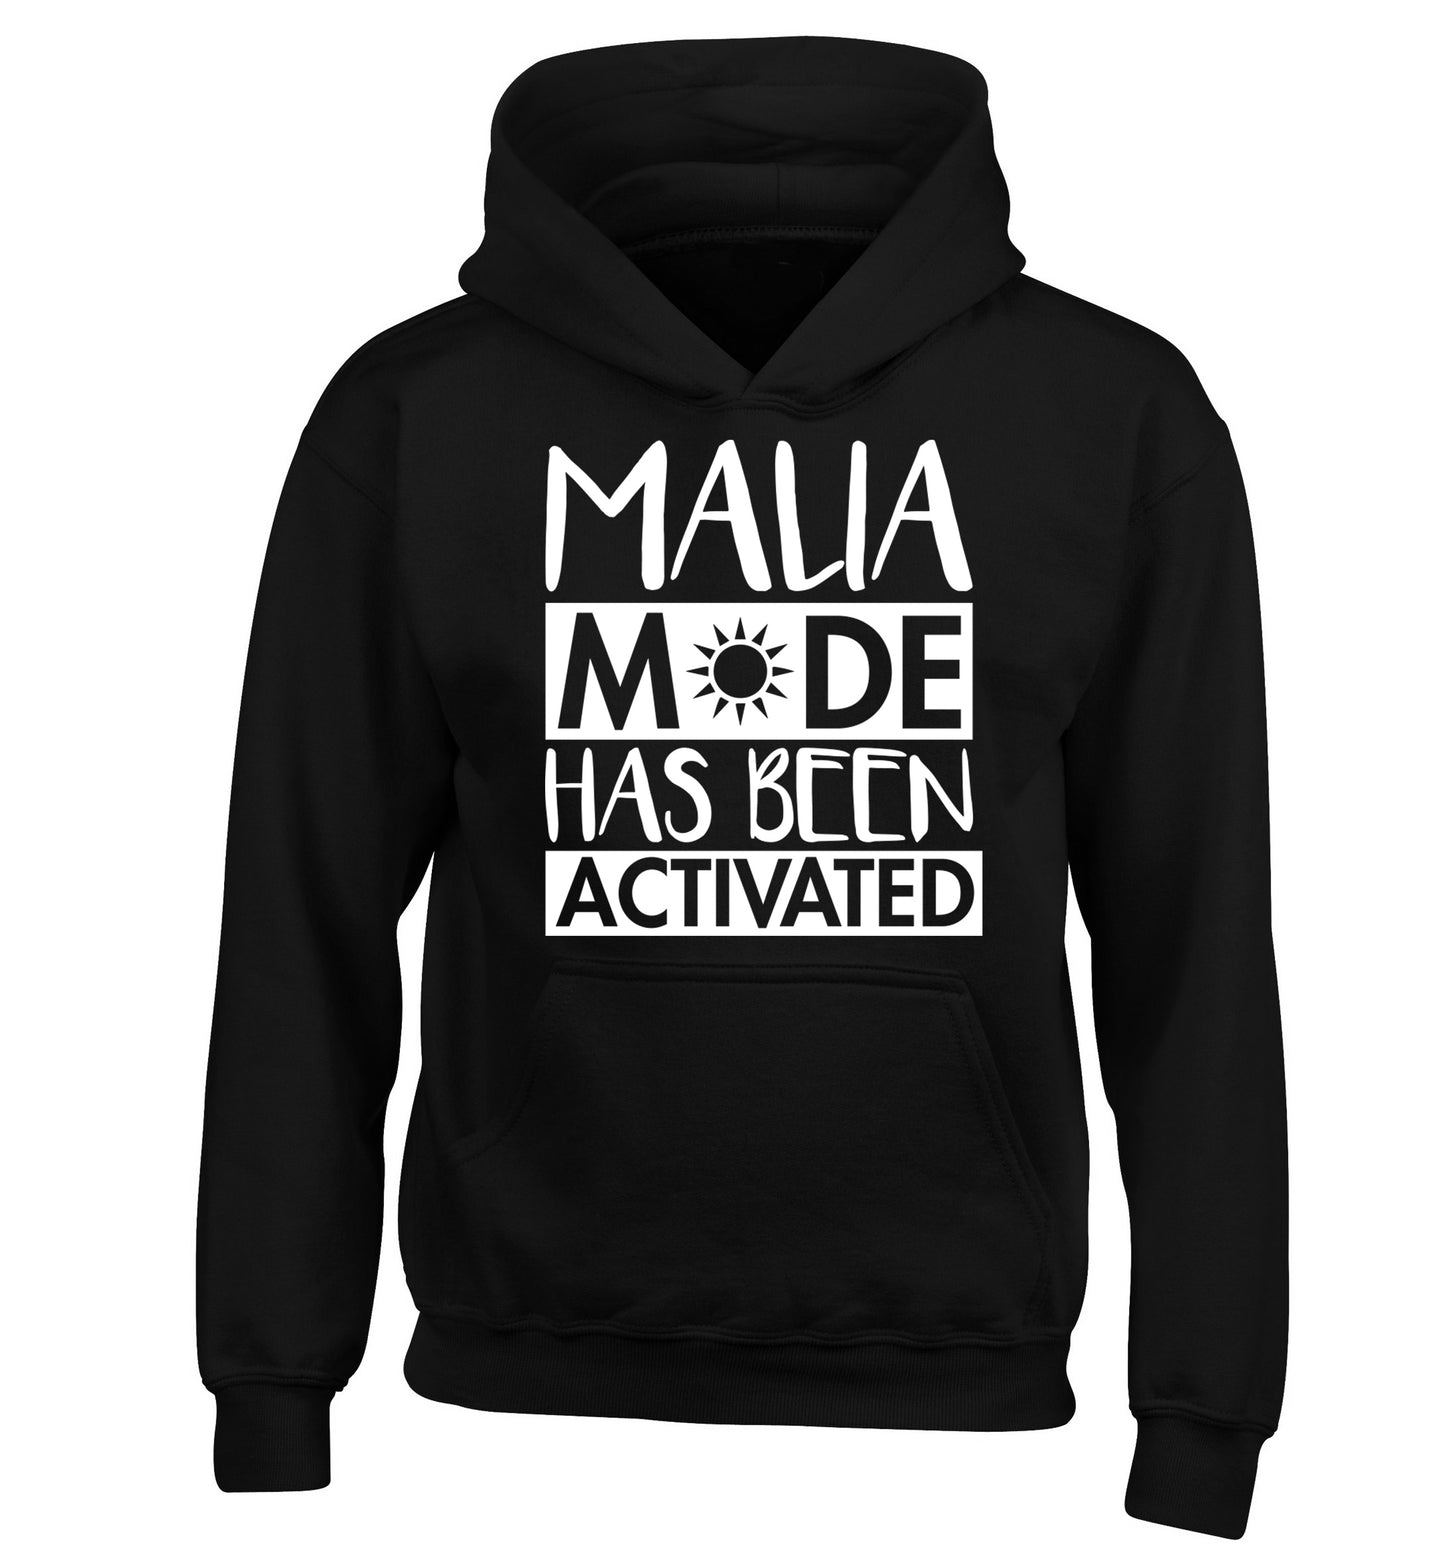 Malia mode has been activated children's black hoodie 12-13 Years